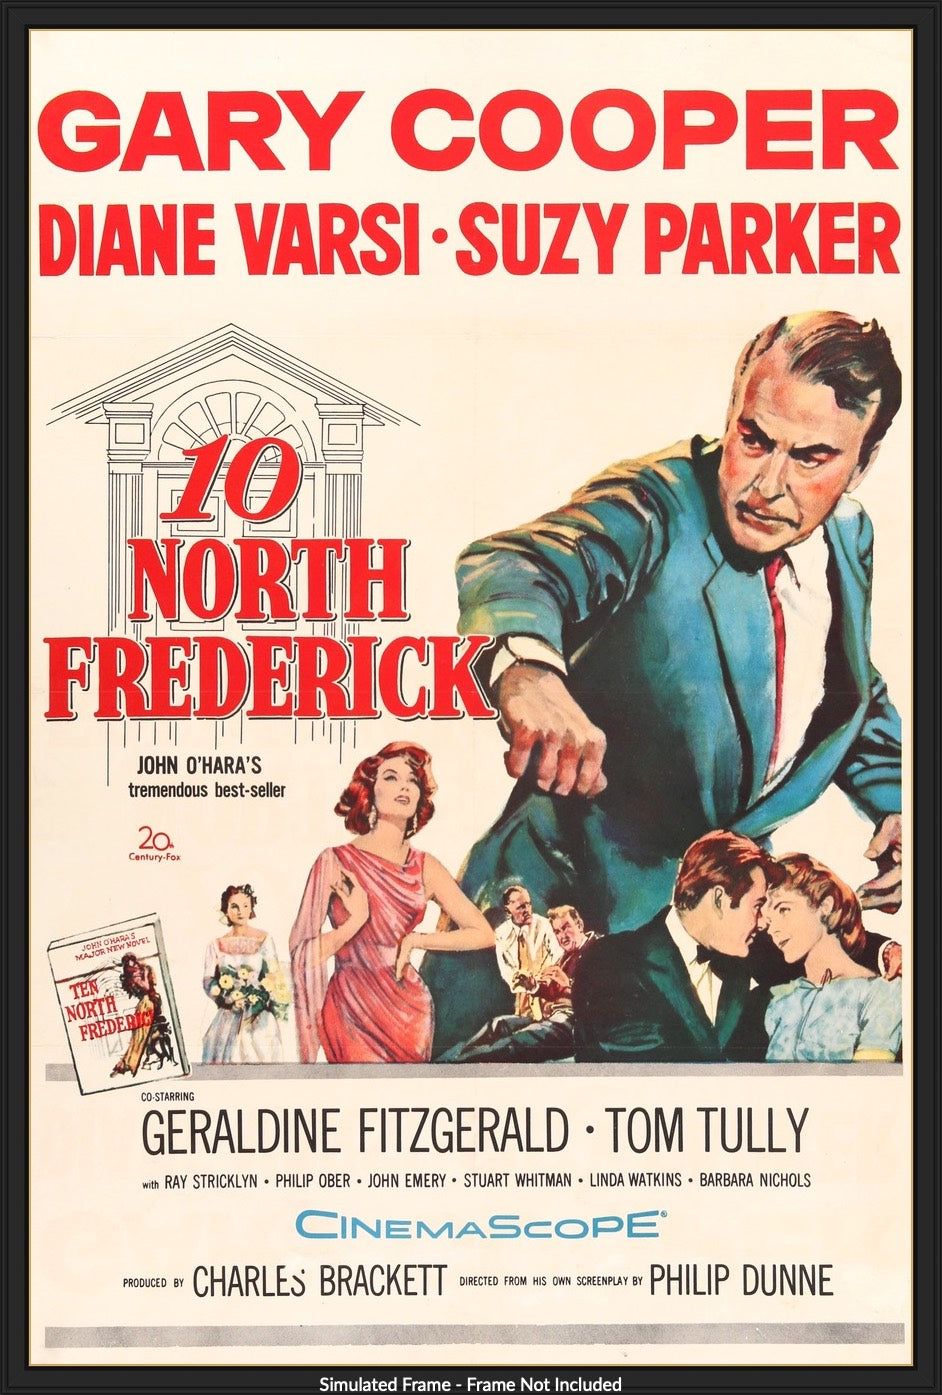 Ten North Frederick (1958) original movie poster for sale at Original Film Art